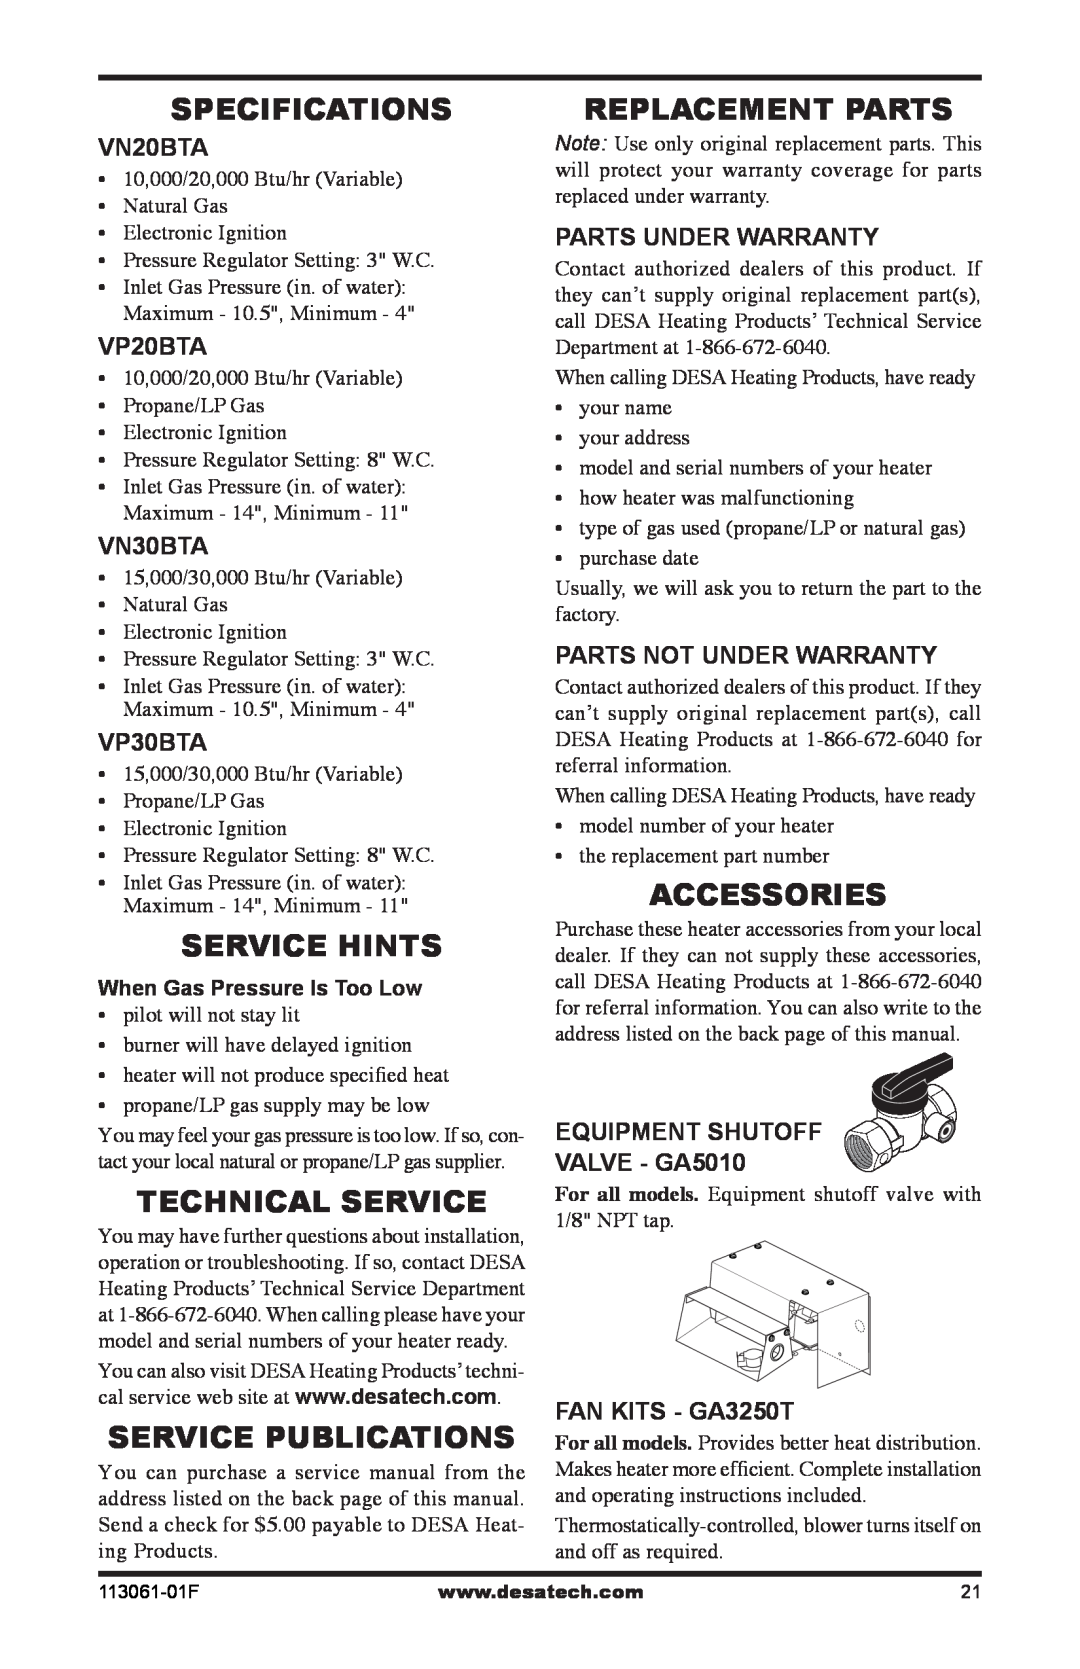 Desa VN30BTA Specifications, Service Hints, Technical Service, Service Publications, Replacement Parts, Accessories 